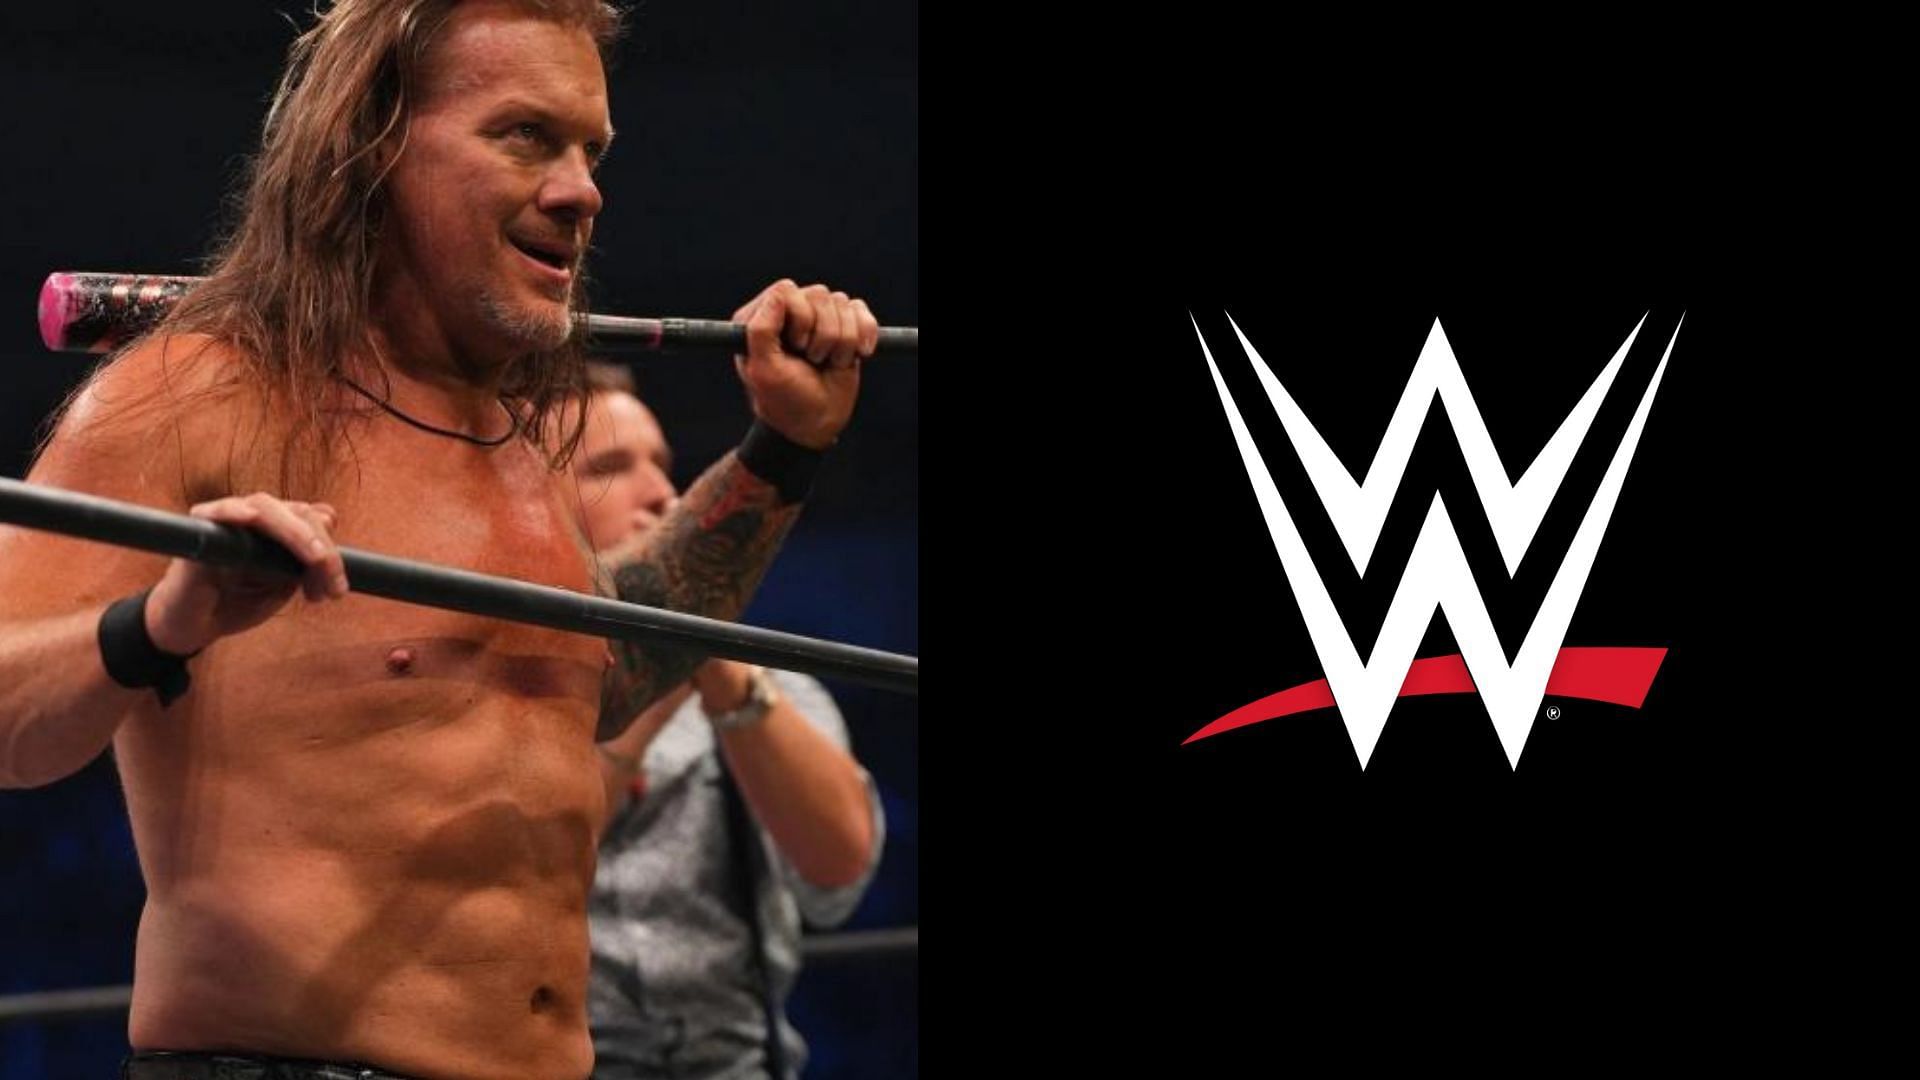 Chris Jericho is a former WWE superstar